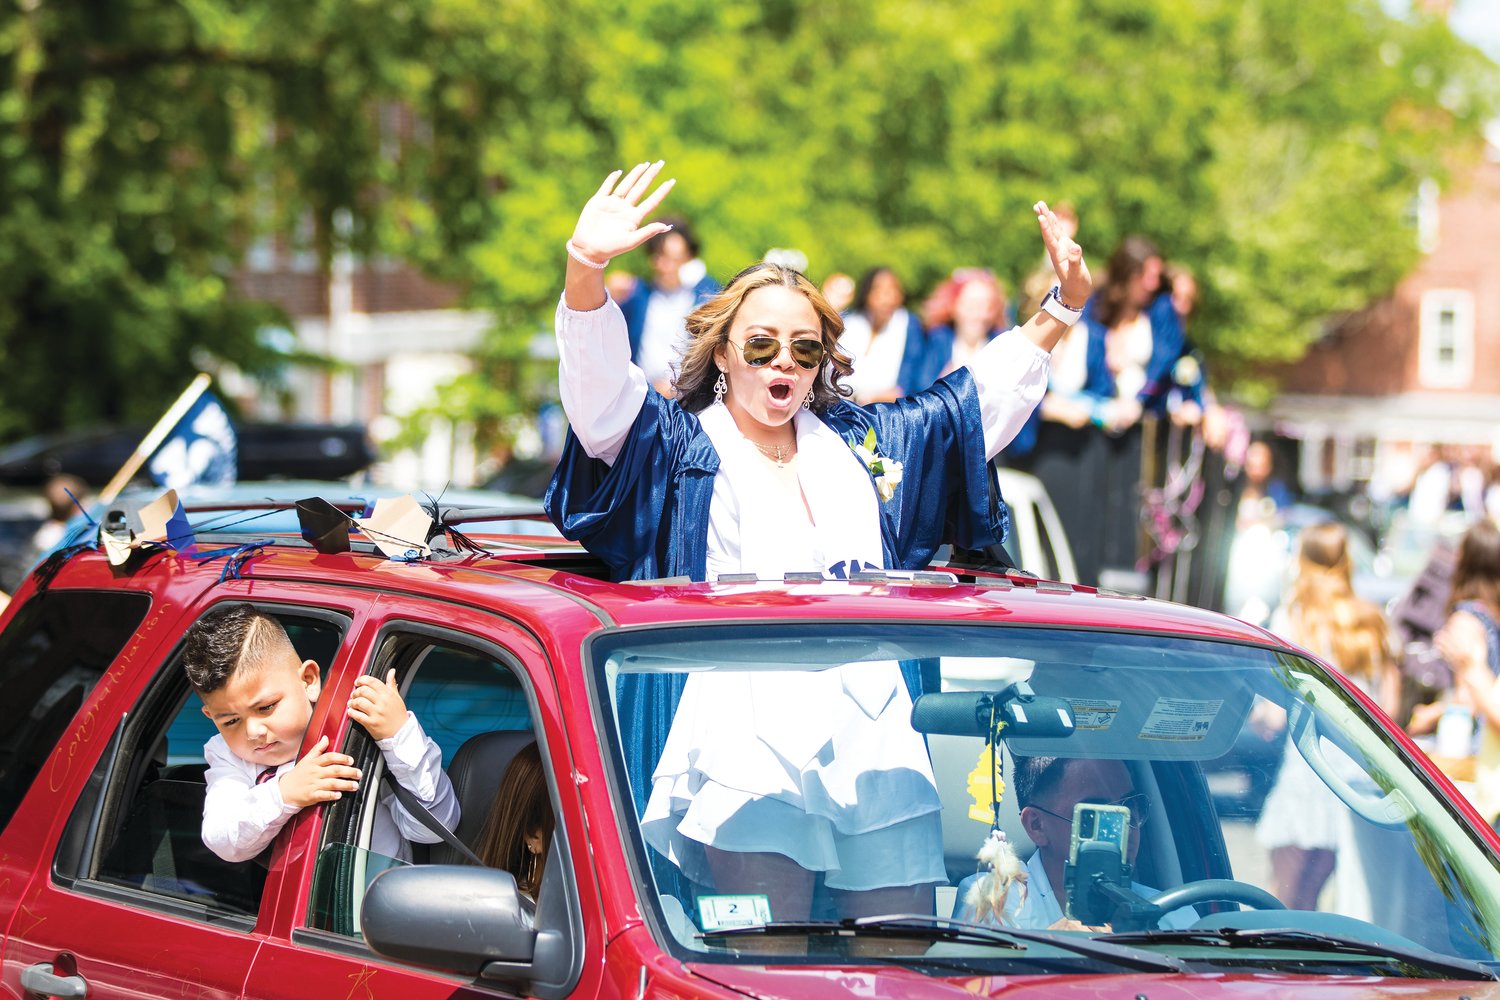 Johana Cerritos celebrates during the downtown car parade following Saturday’s graduation ceremony on the football field at Nantucket High School.